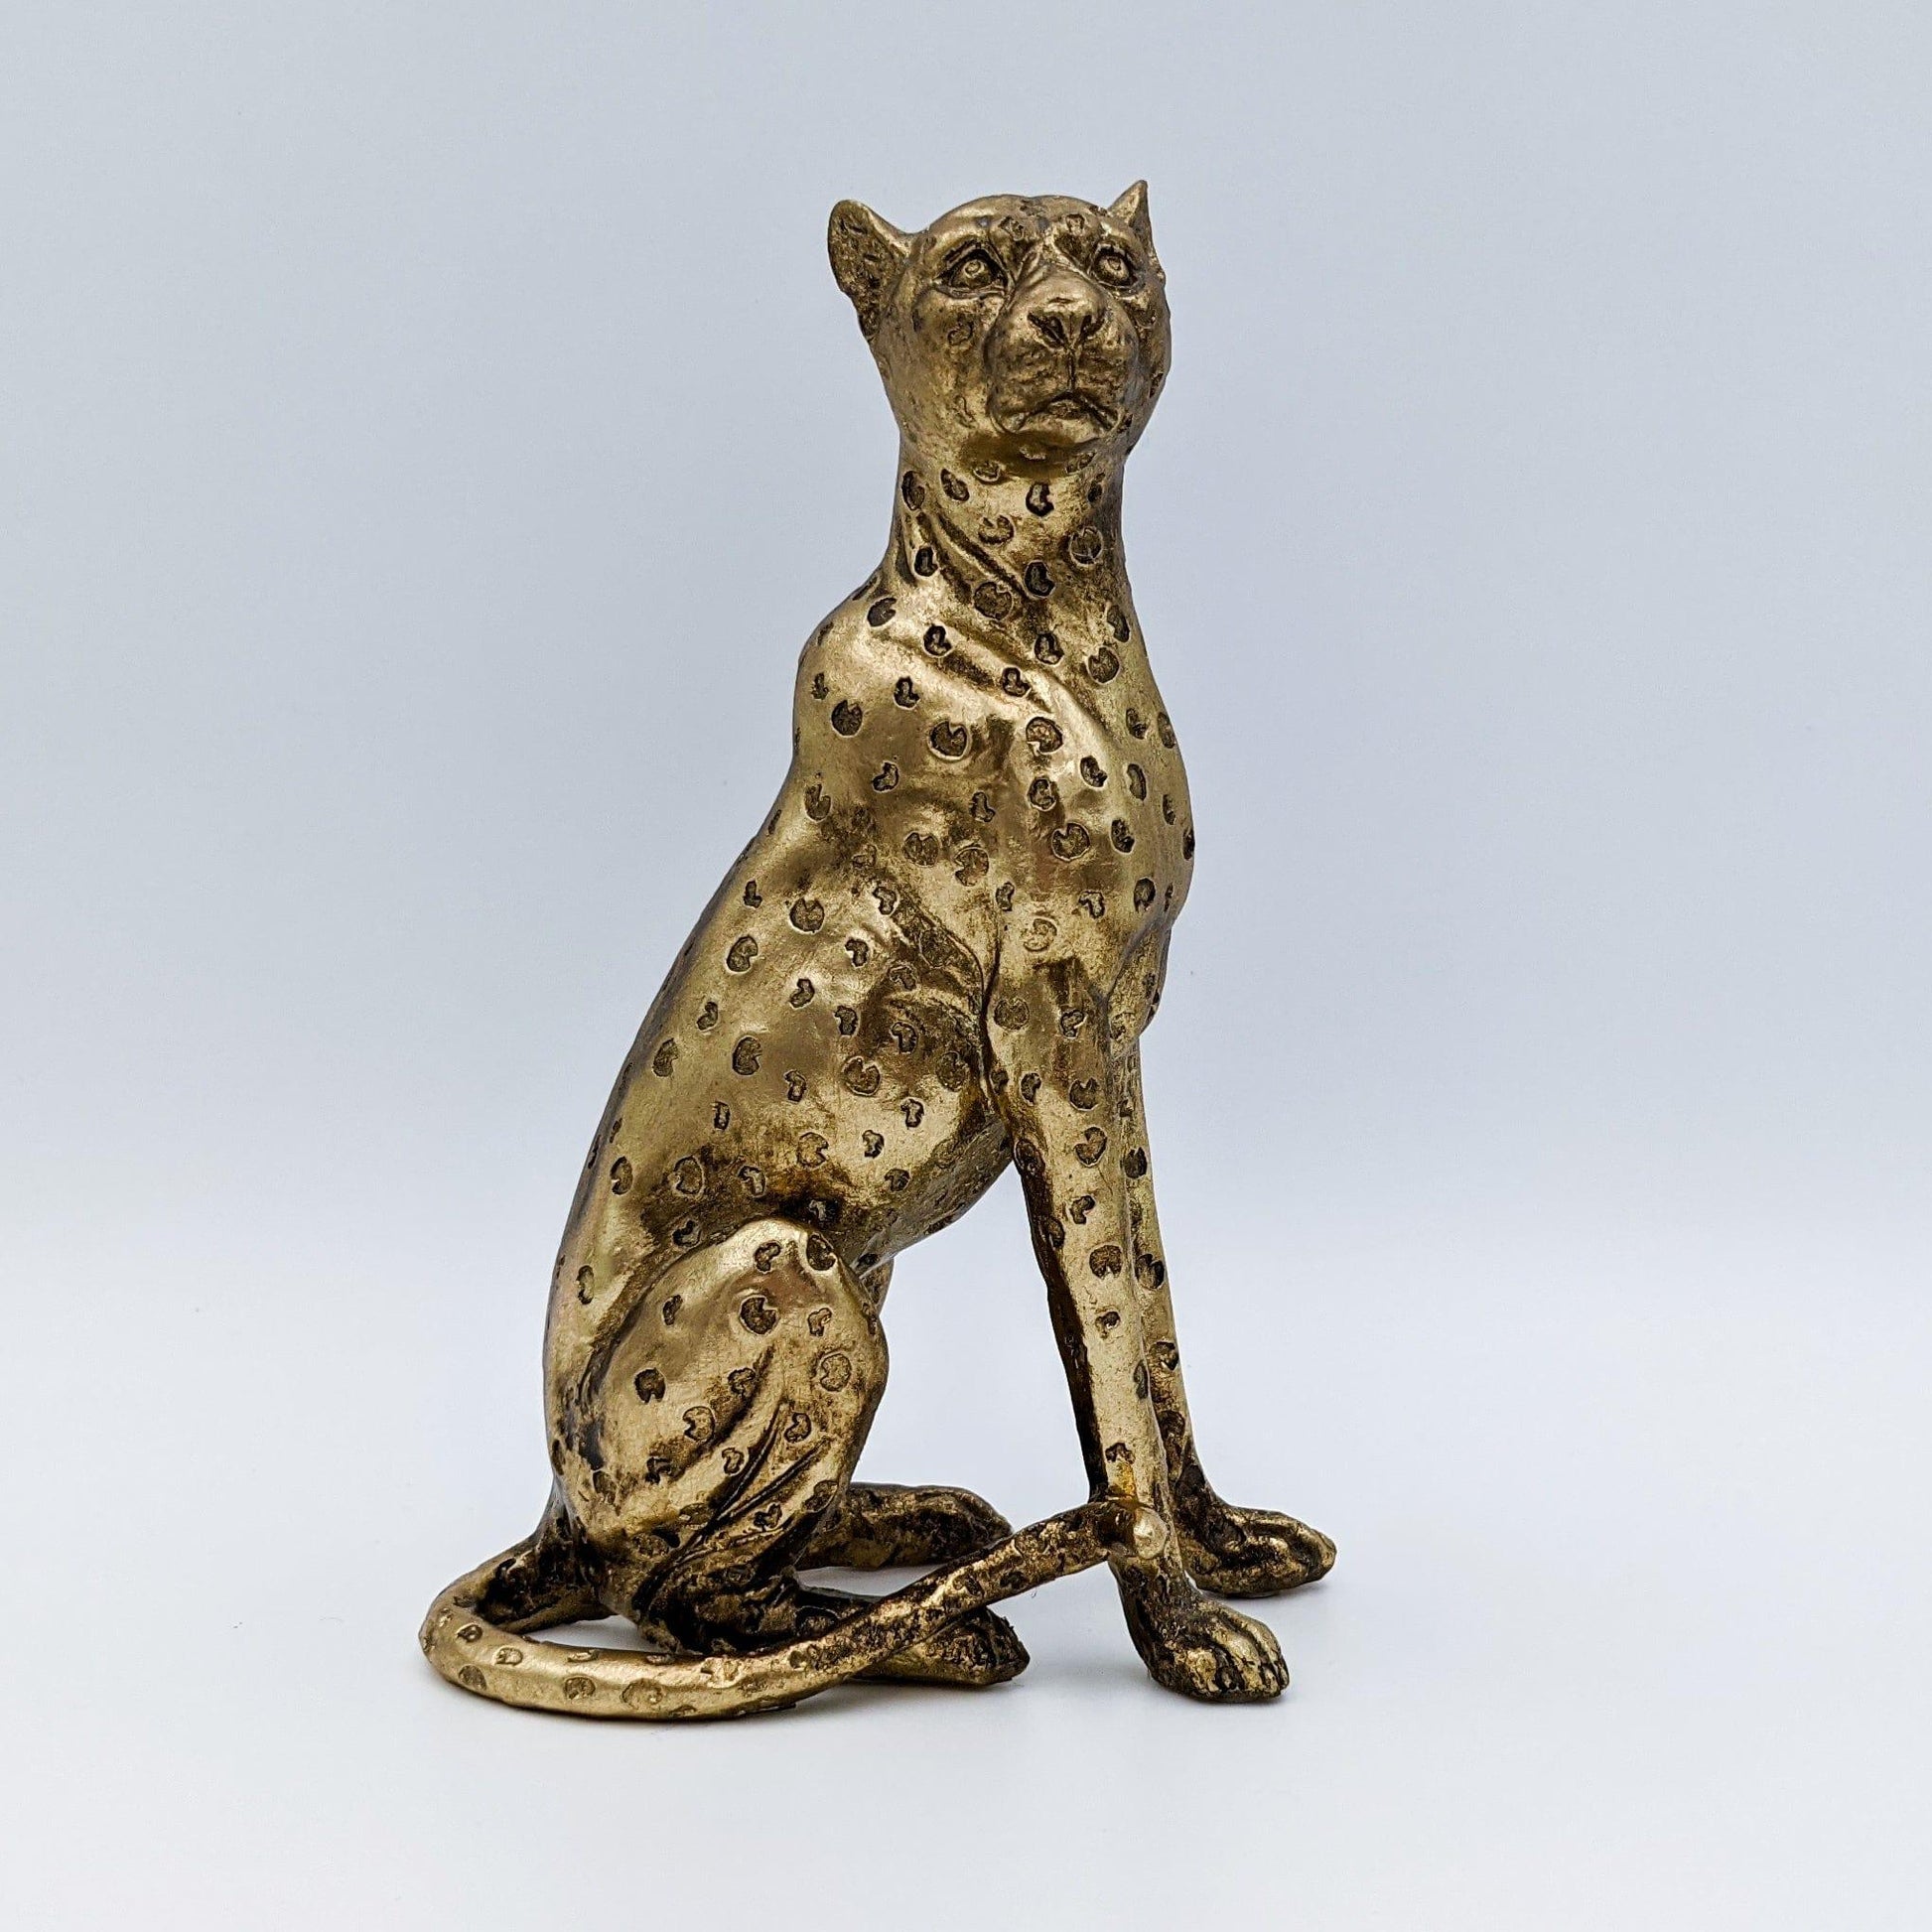 House Journey Ornament Gold Leopard Statue